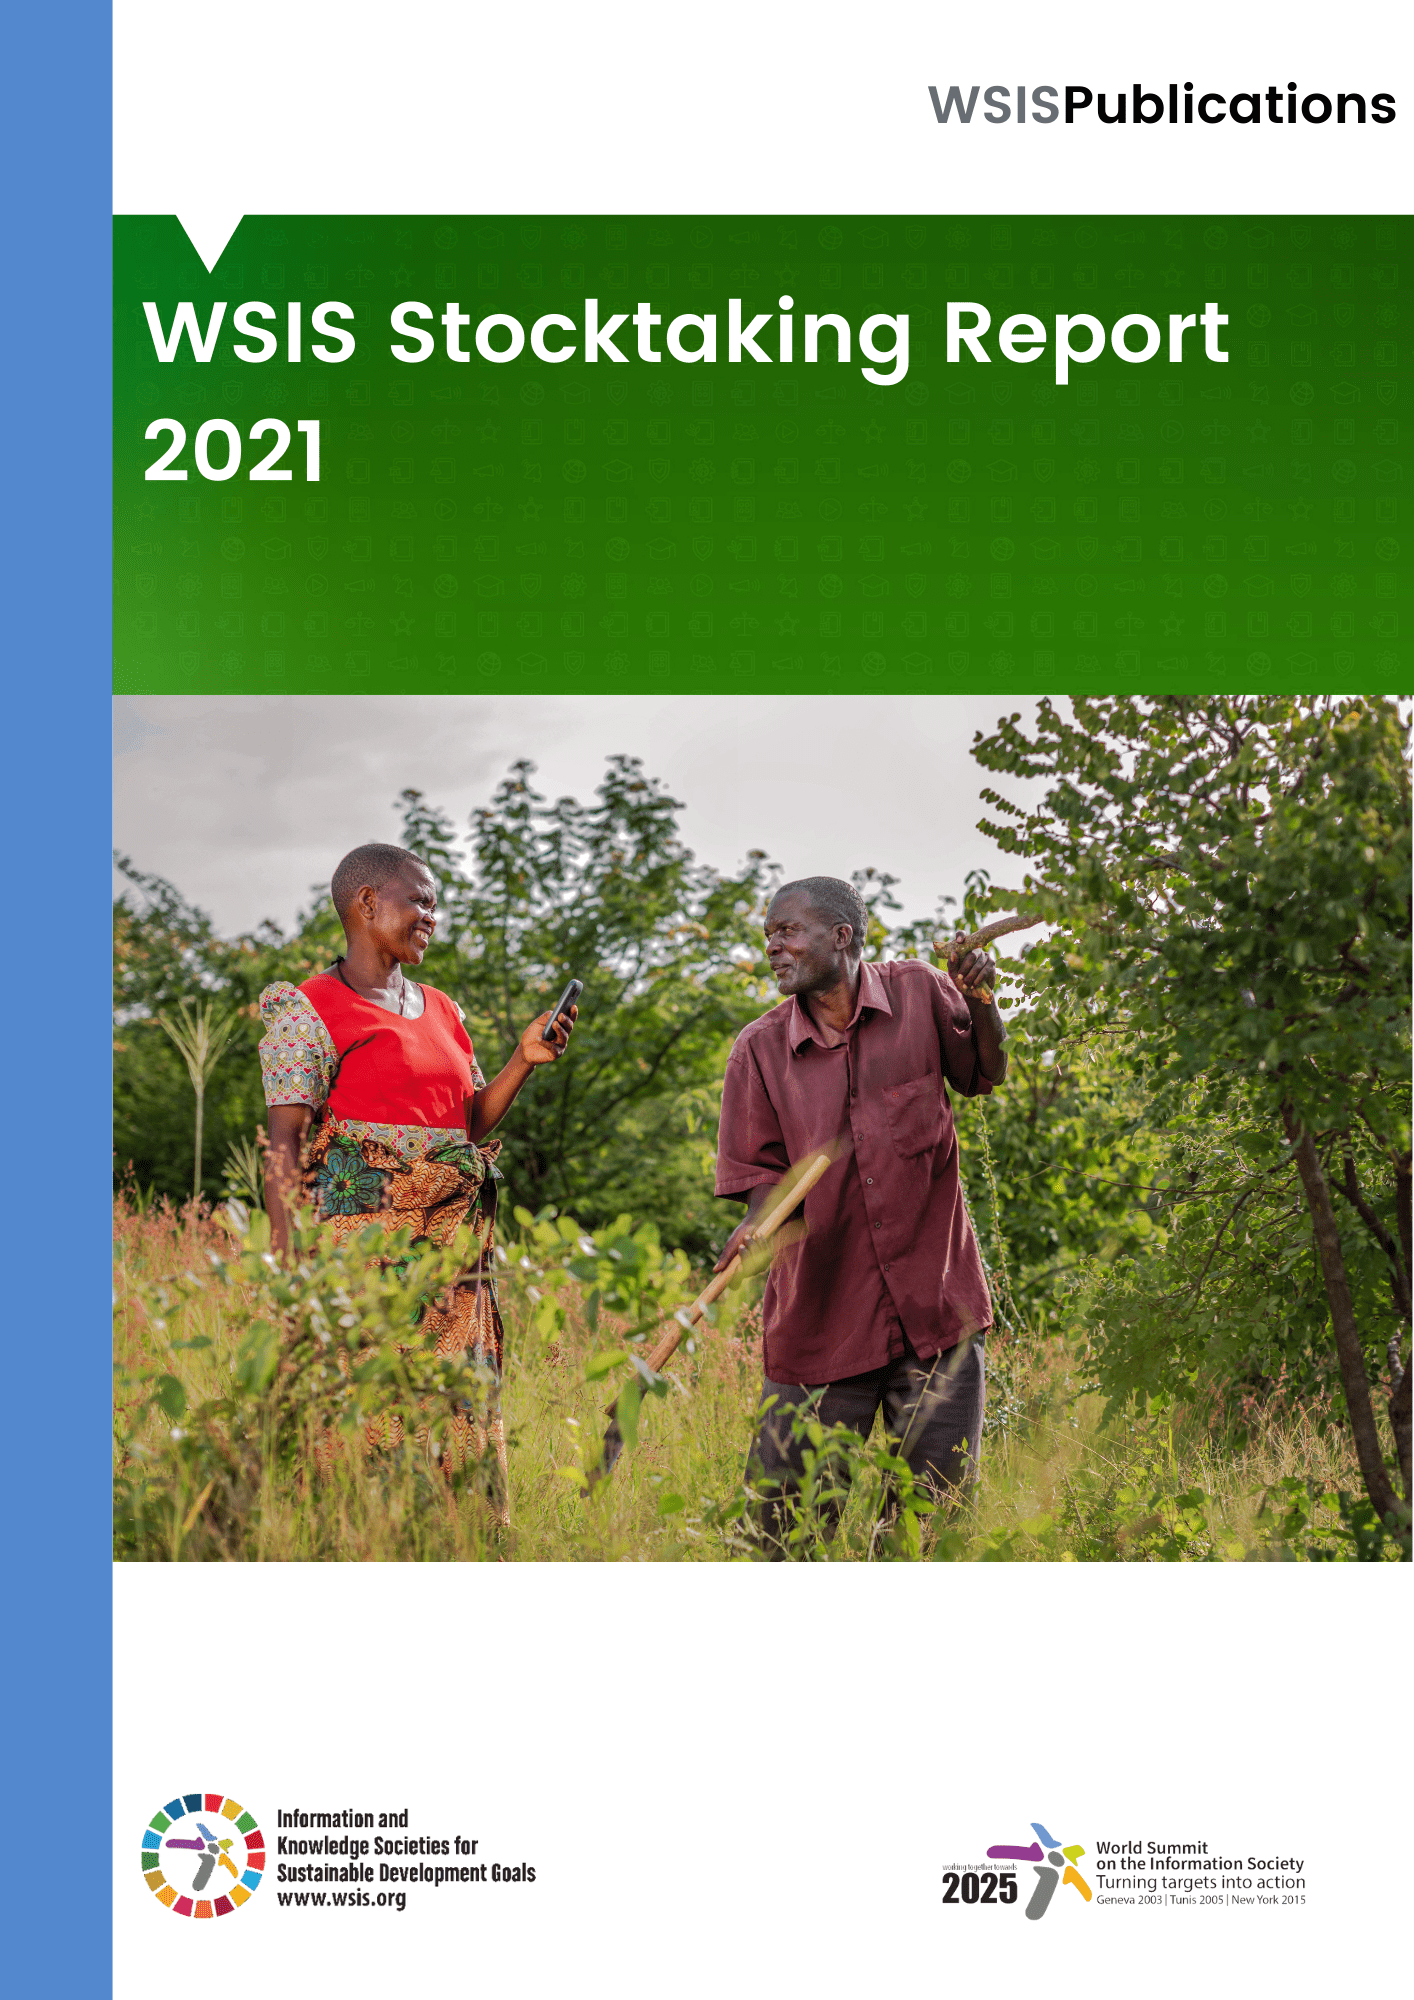 WSIS Stocktaking 2021 Global Report